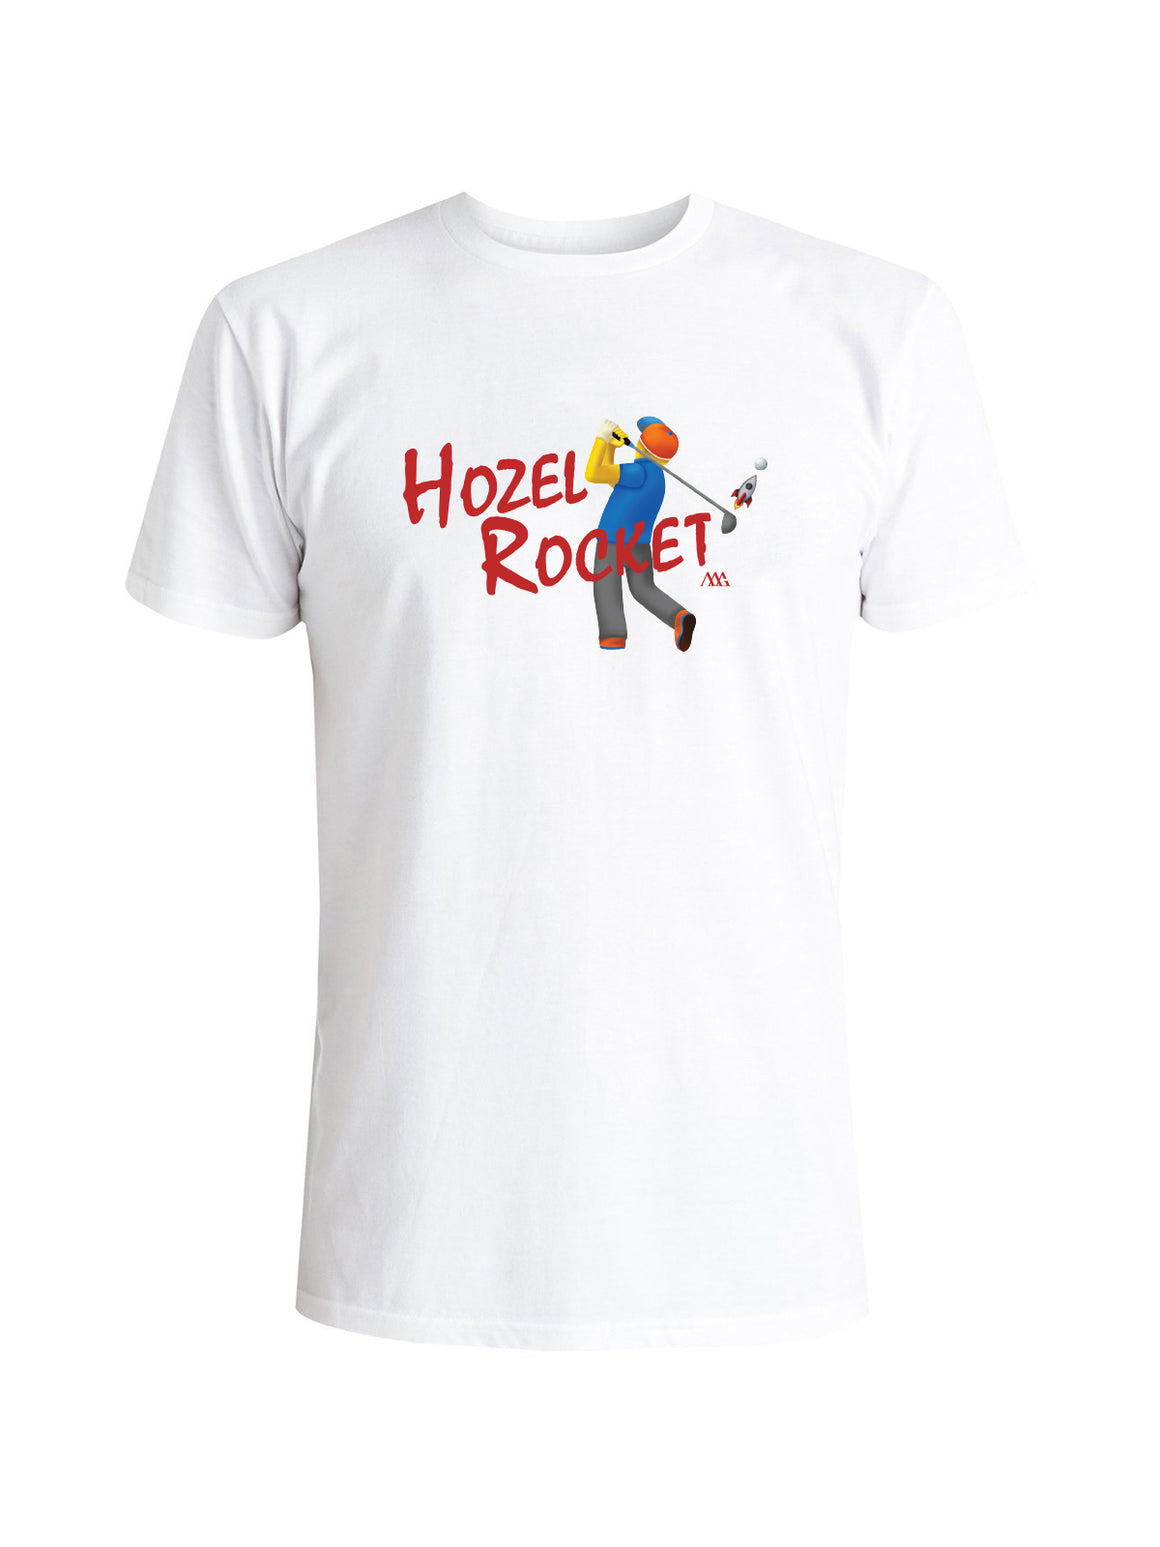 Hozel Rocket Tee Shirt -  White (Red)